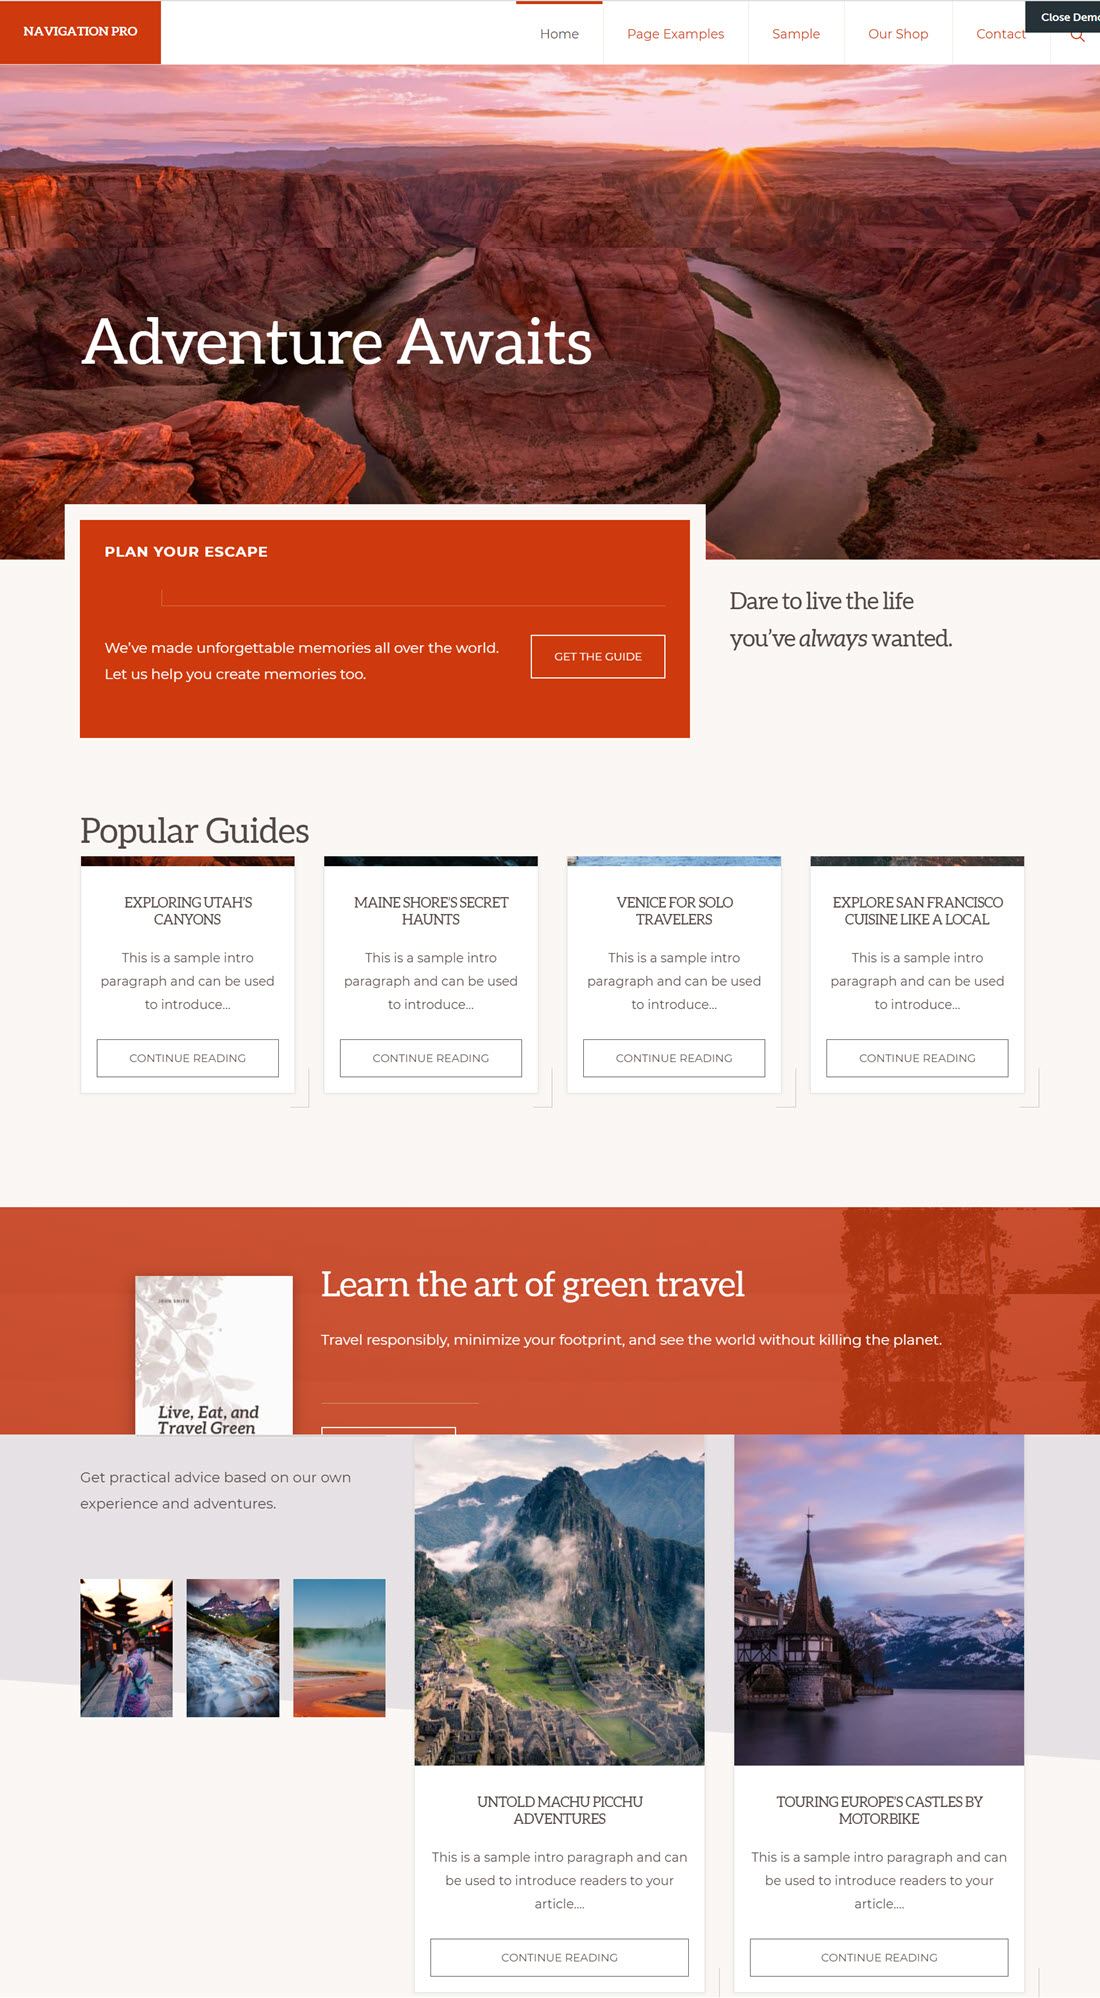 Navigation Pro Eco-Friendly WordPress Themes Screenshot